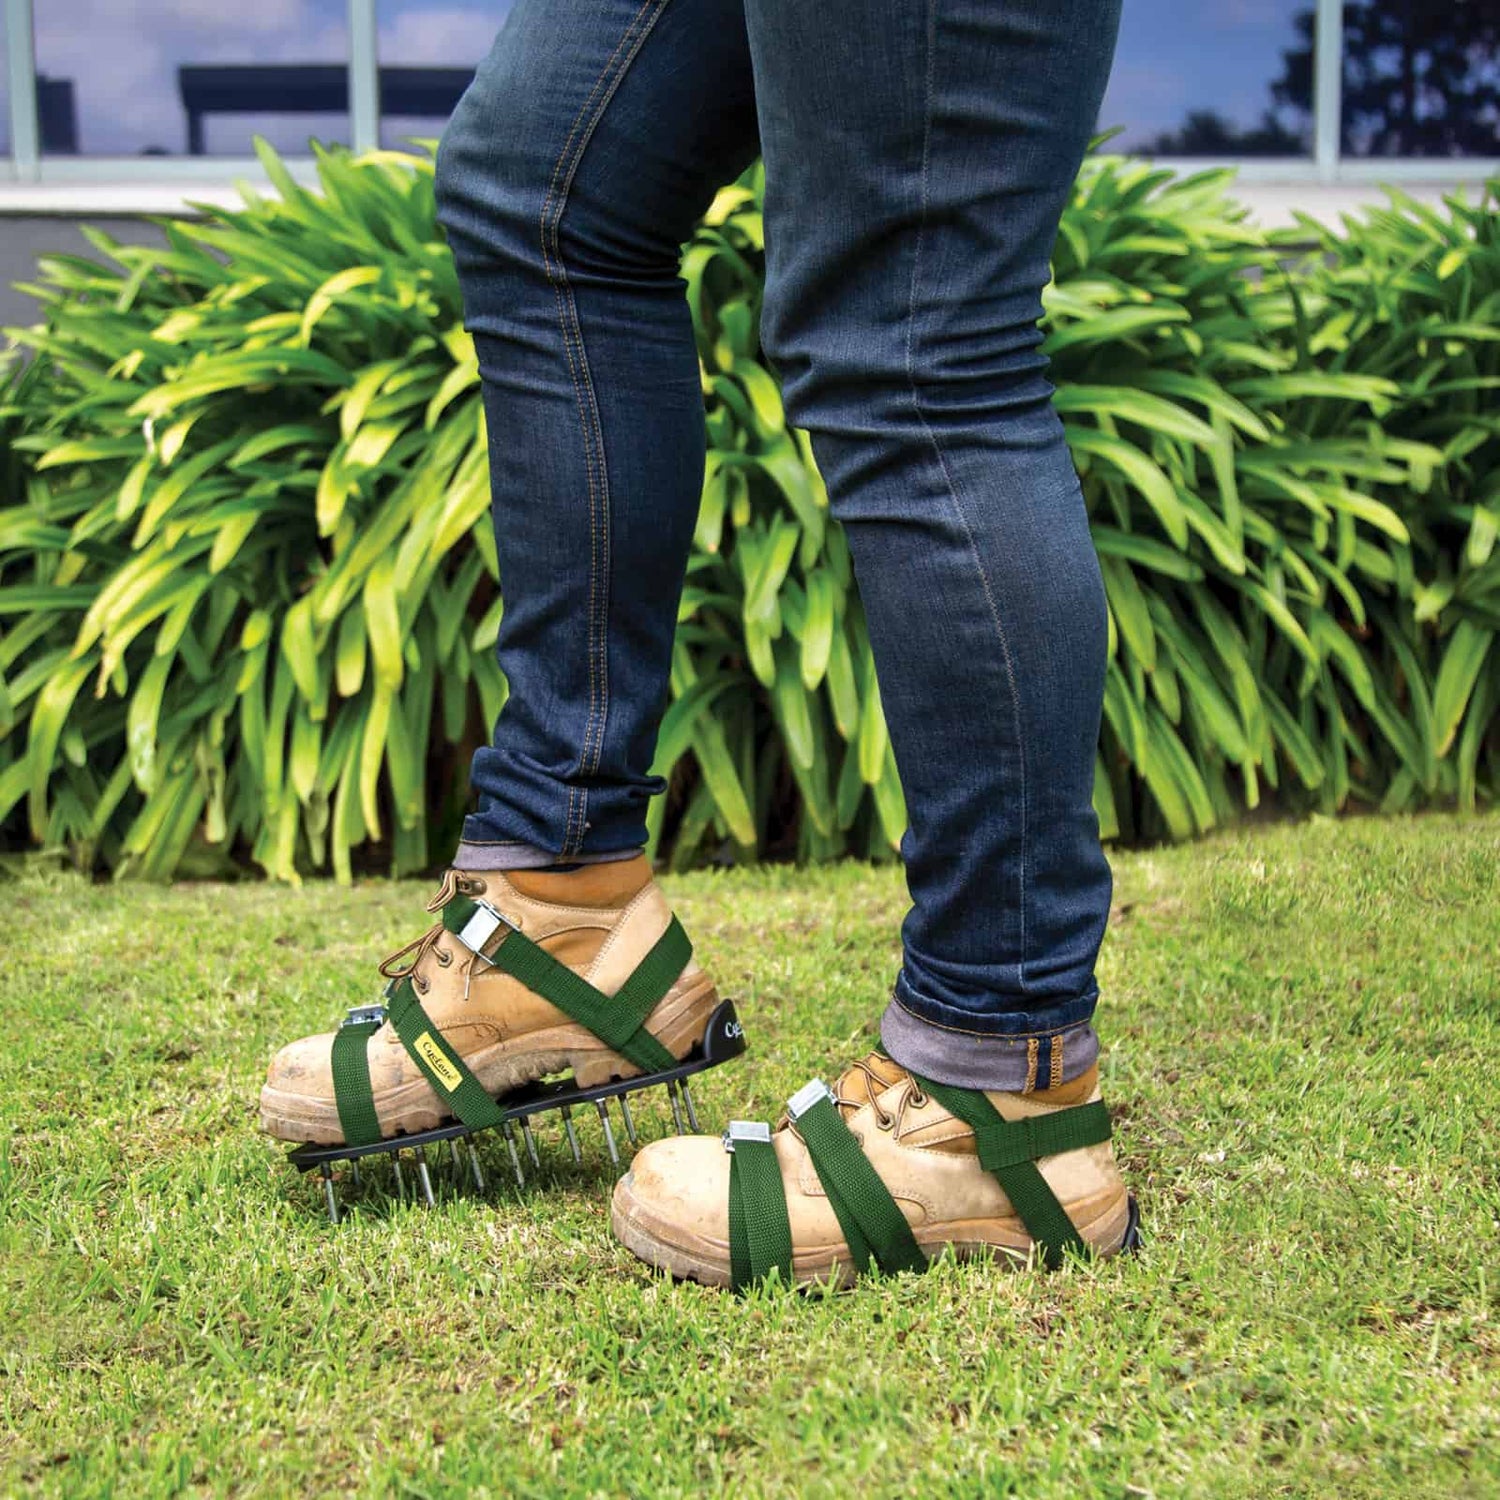 Lawn Aeration Sandals